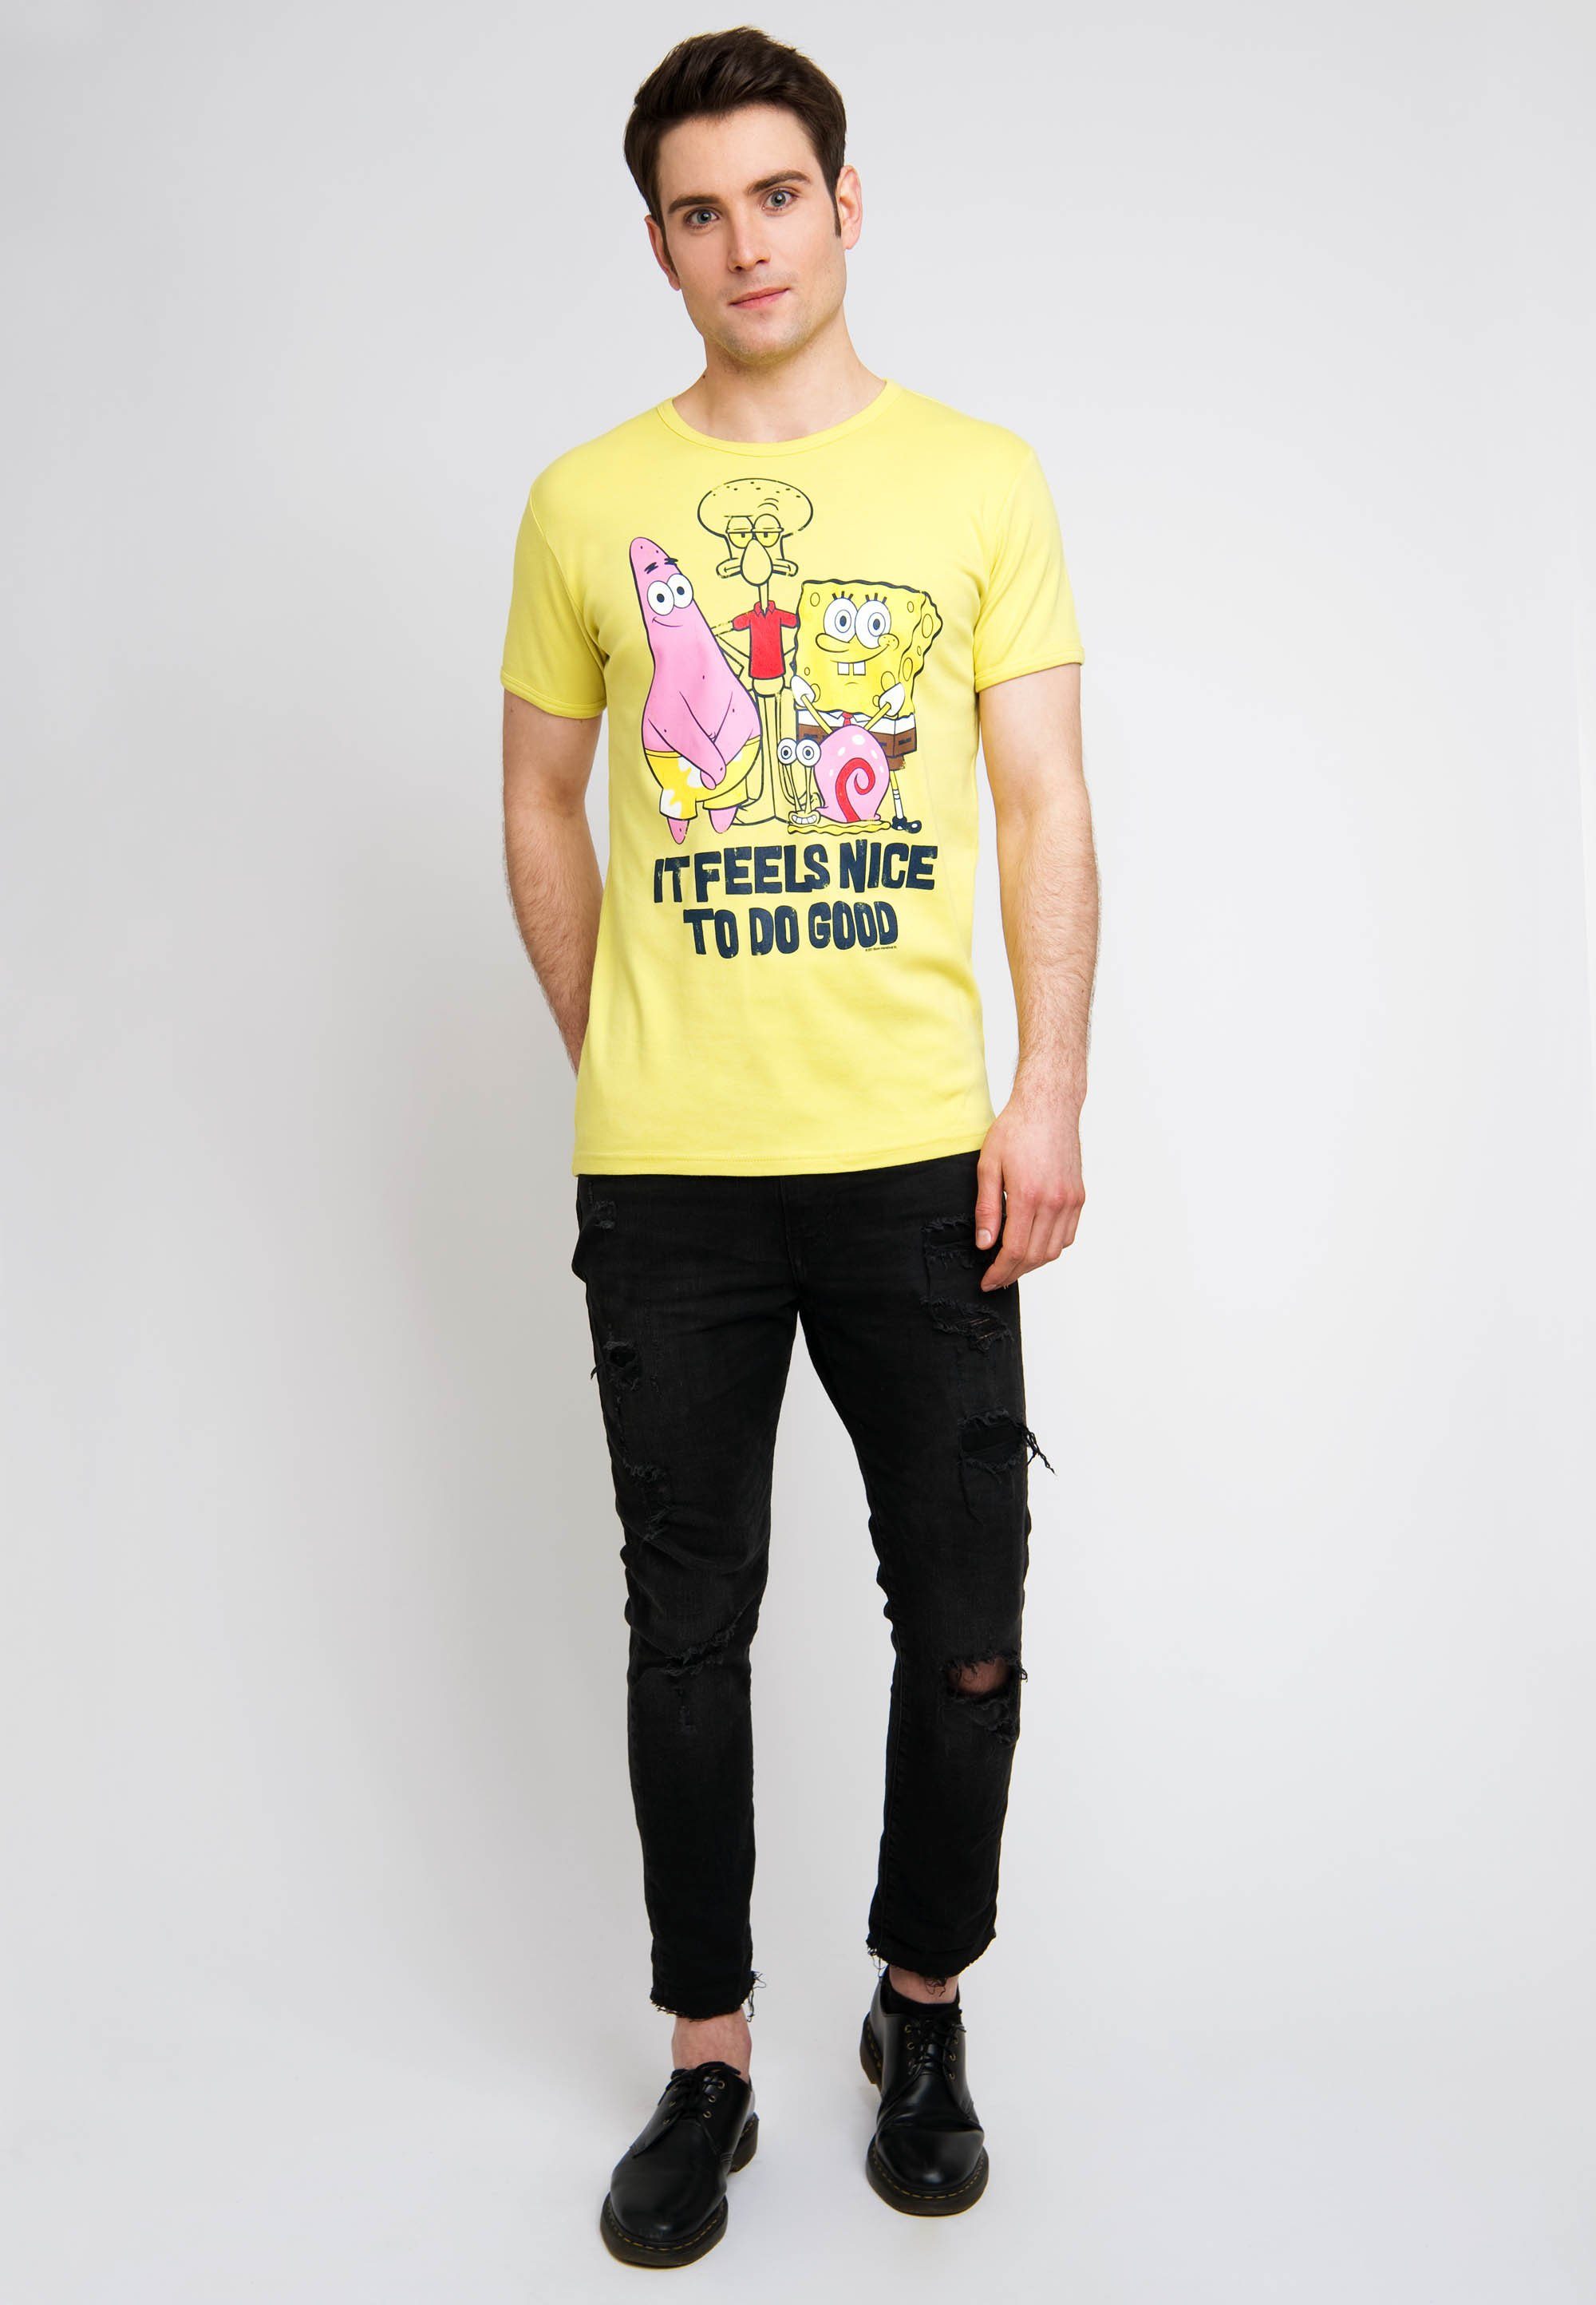 Spongebob mit Statement-Print T-Shirt LOGOSHIRT witzigem